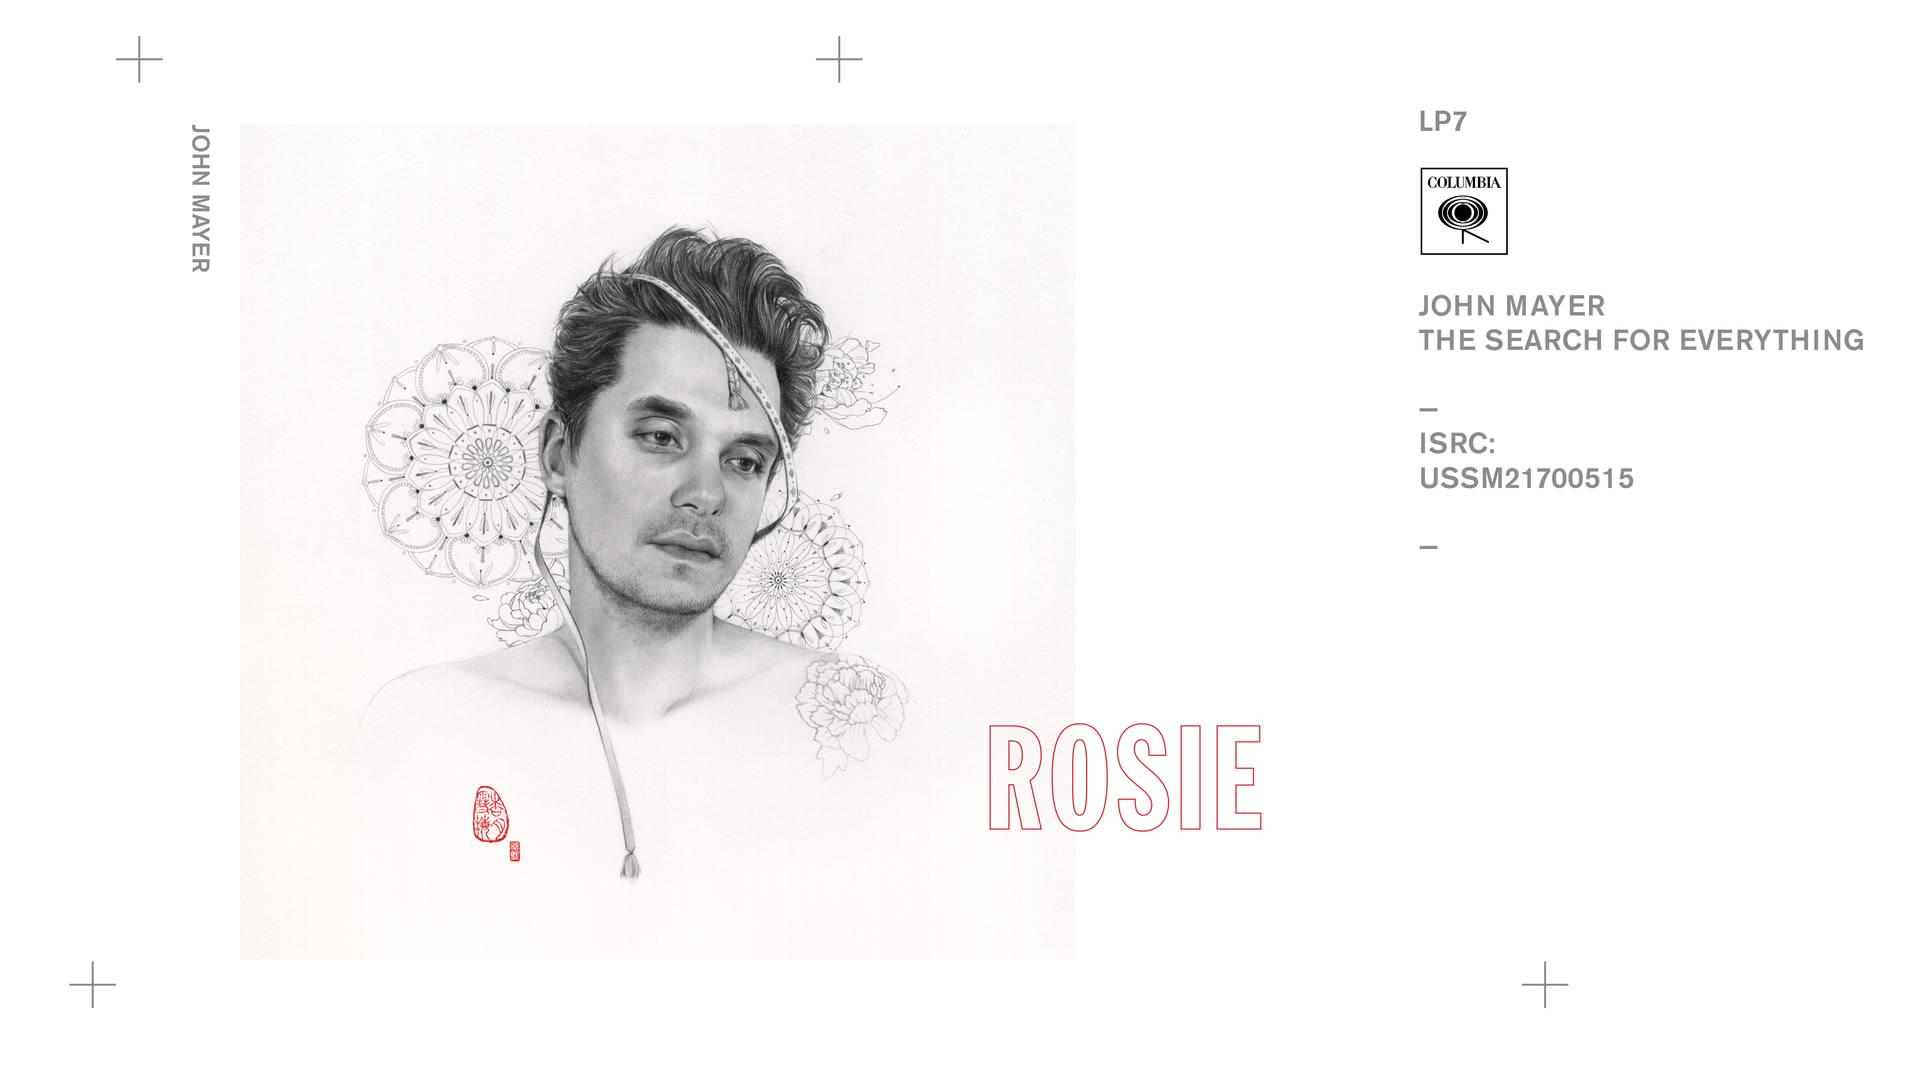 John Mayer - Rosie (Official Audio)